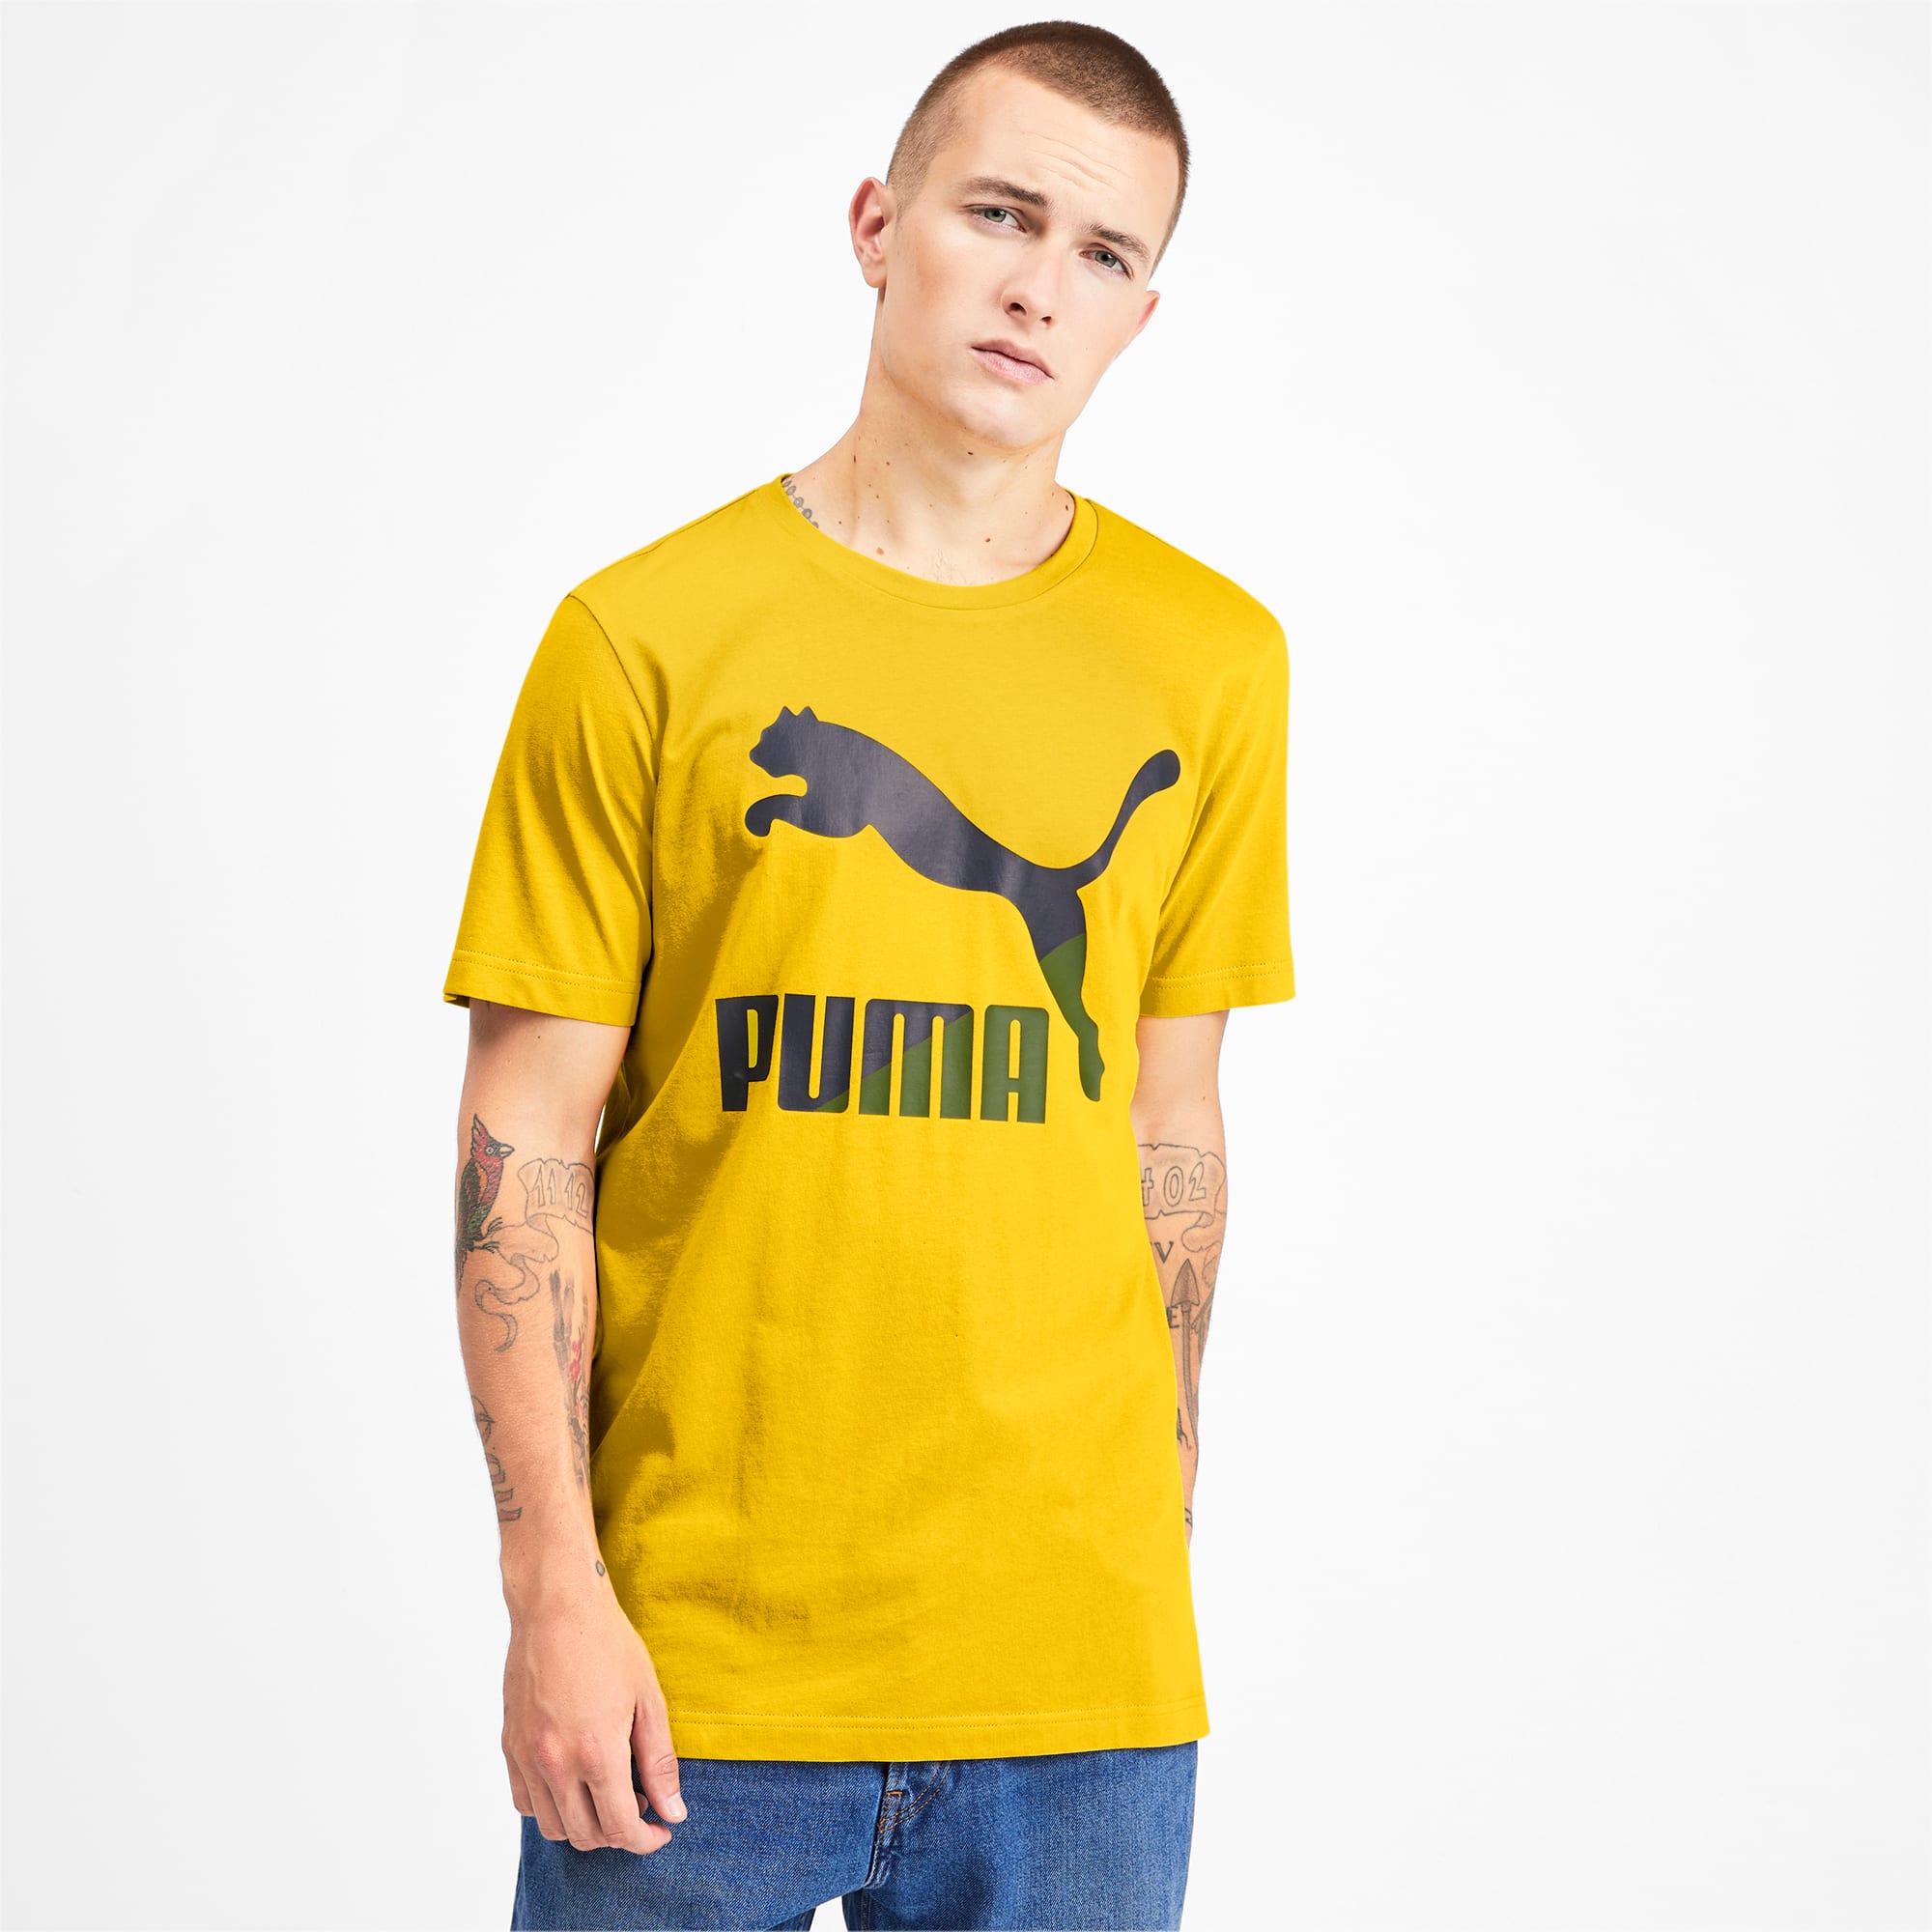 puma classic logo t shirt